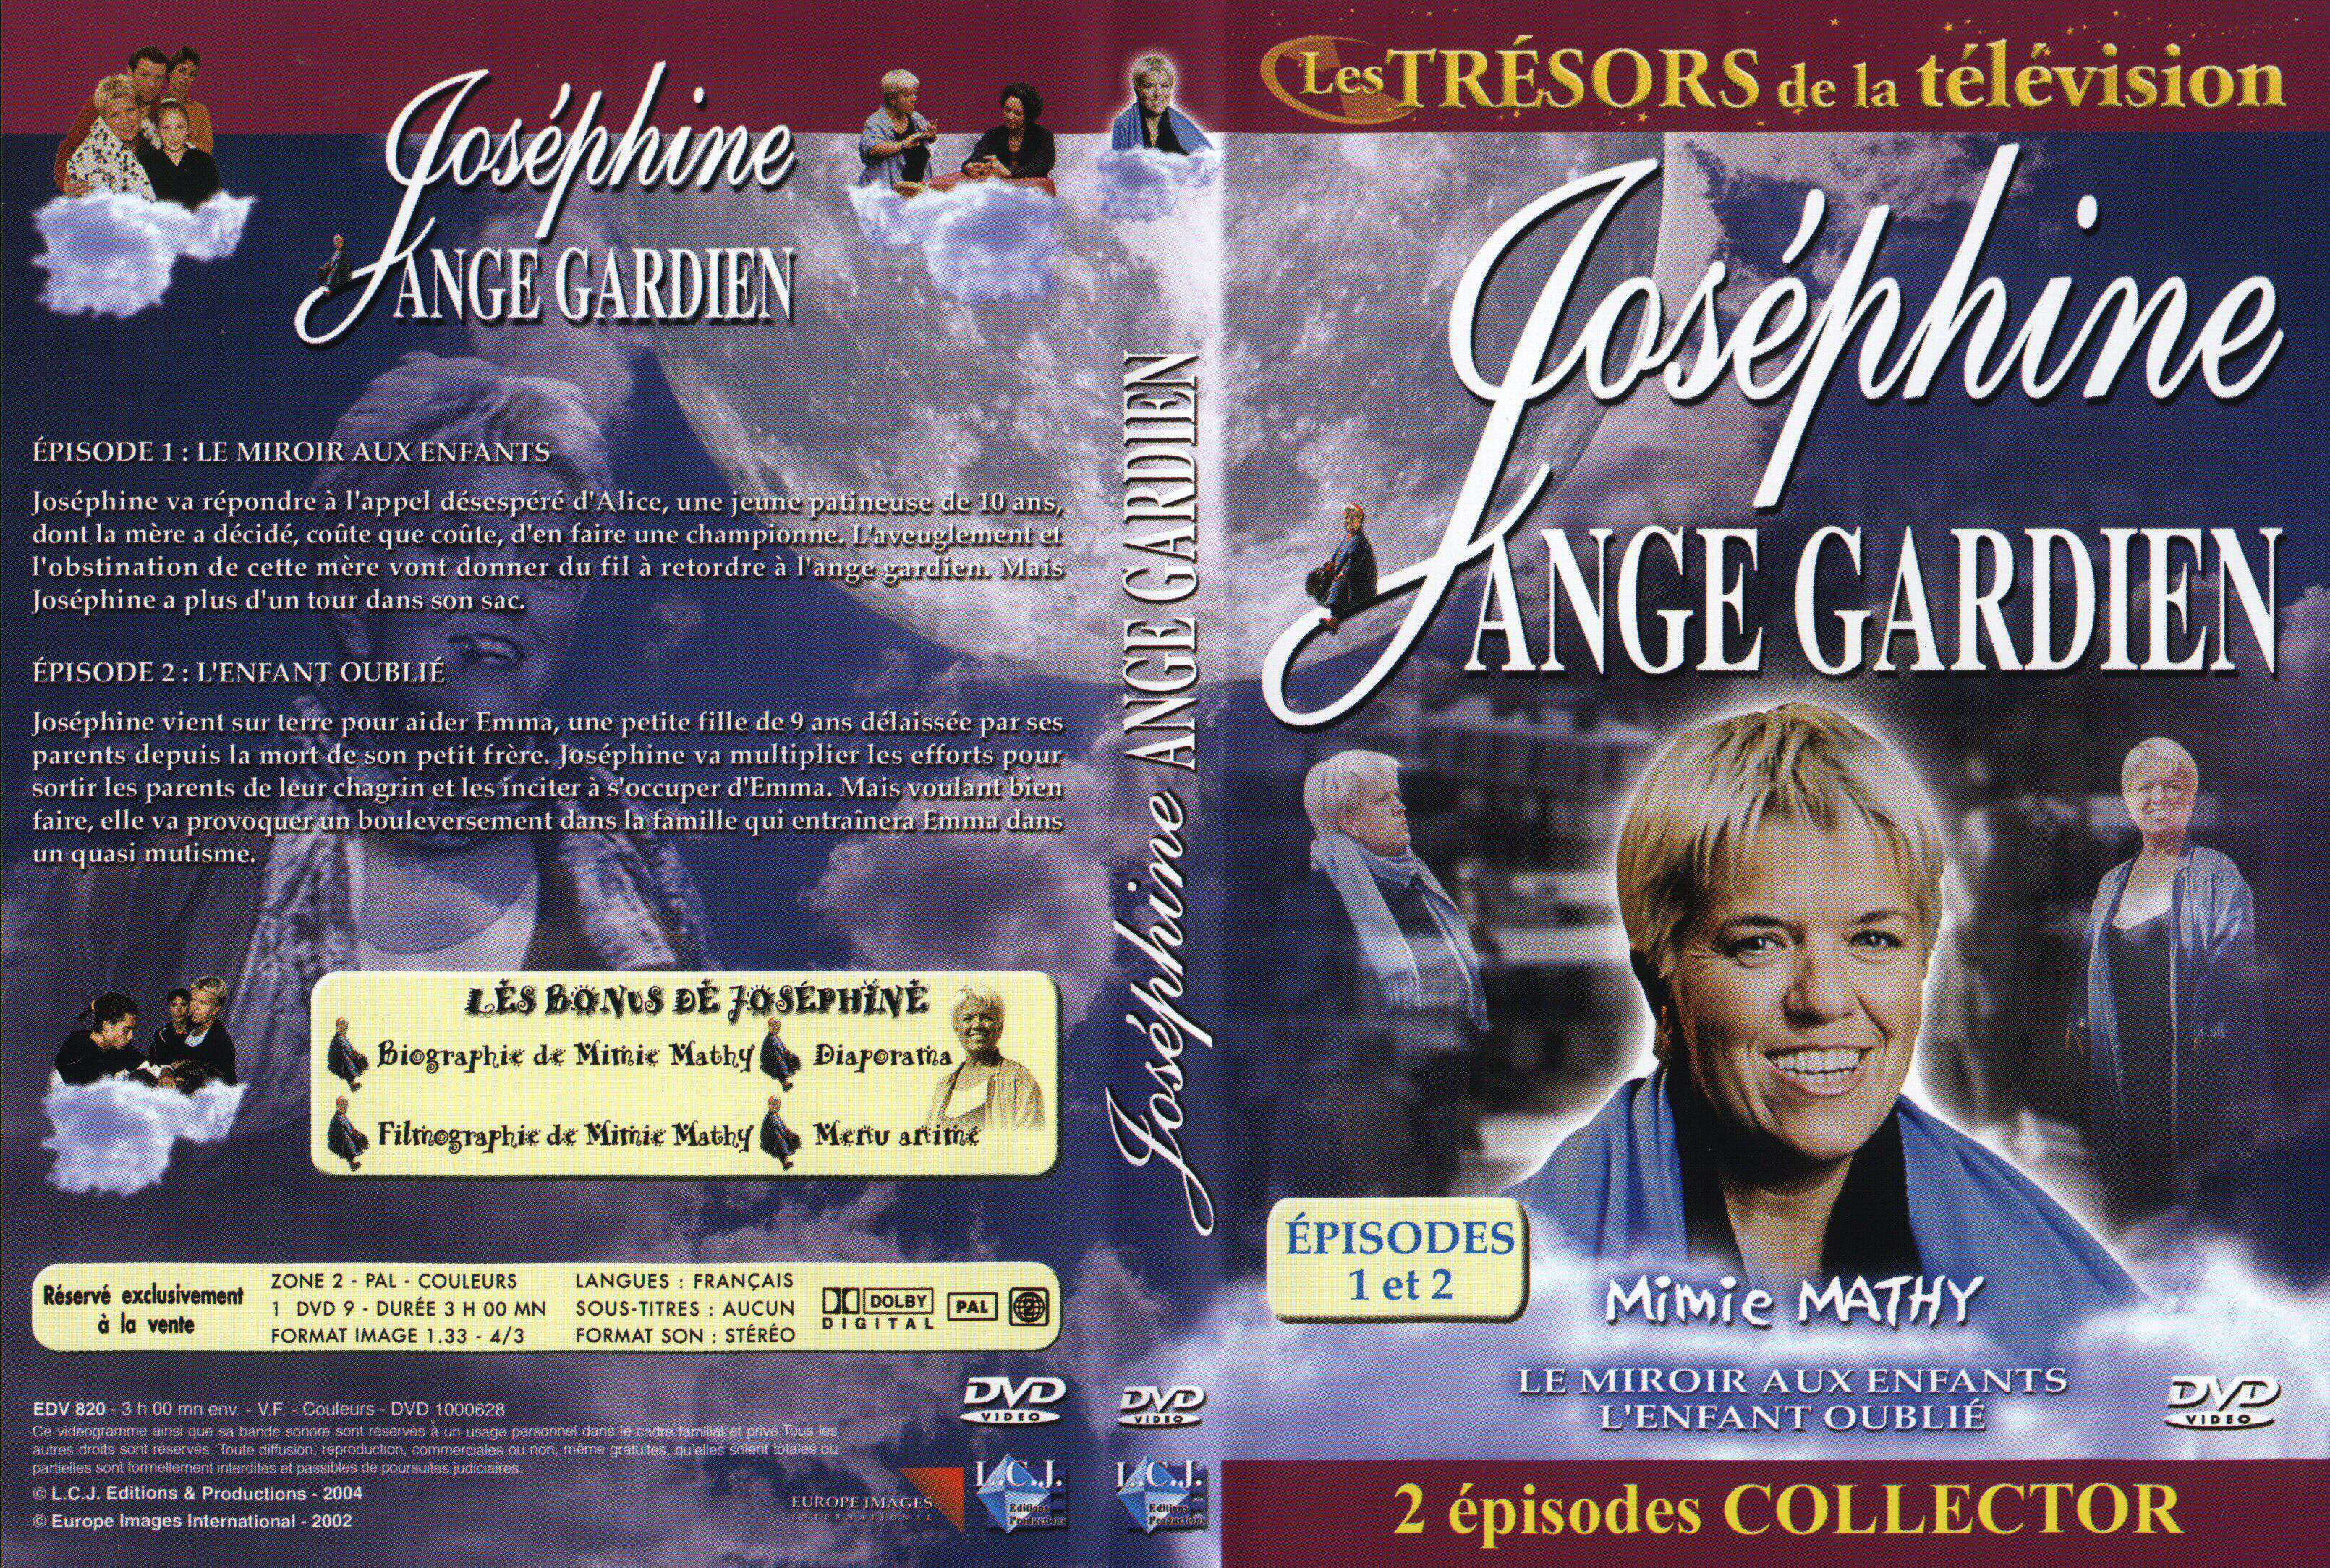 Jaquette DVD Josephine ange gardien vol 01 v2